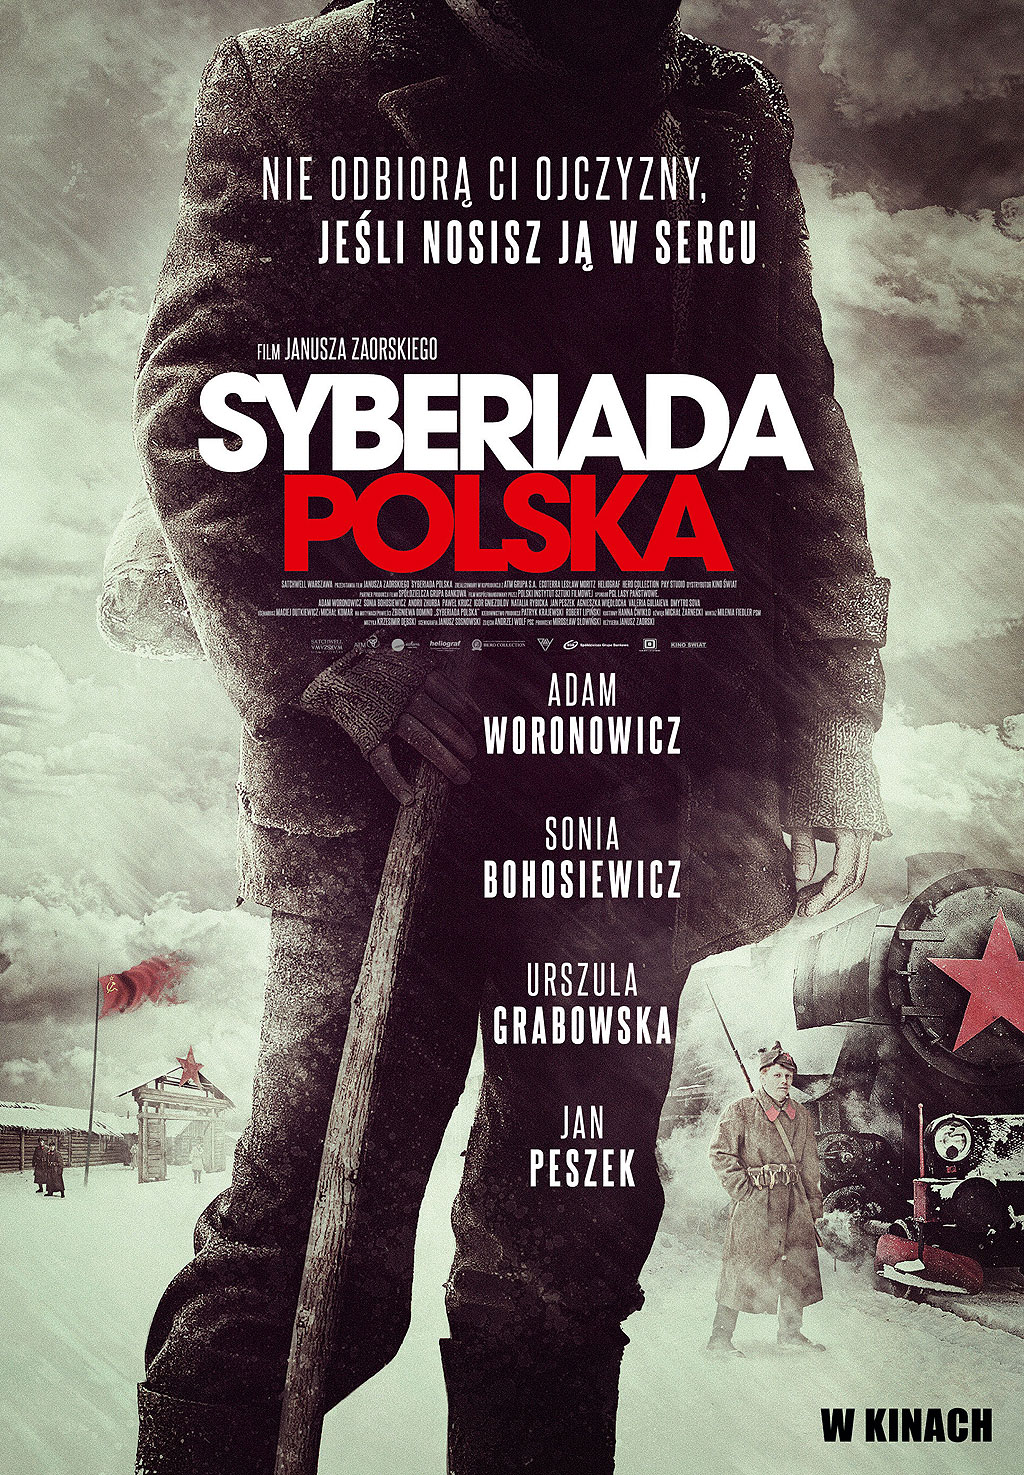 Syberiada polska [film]